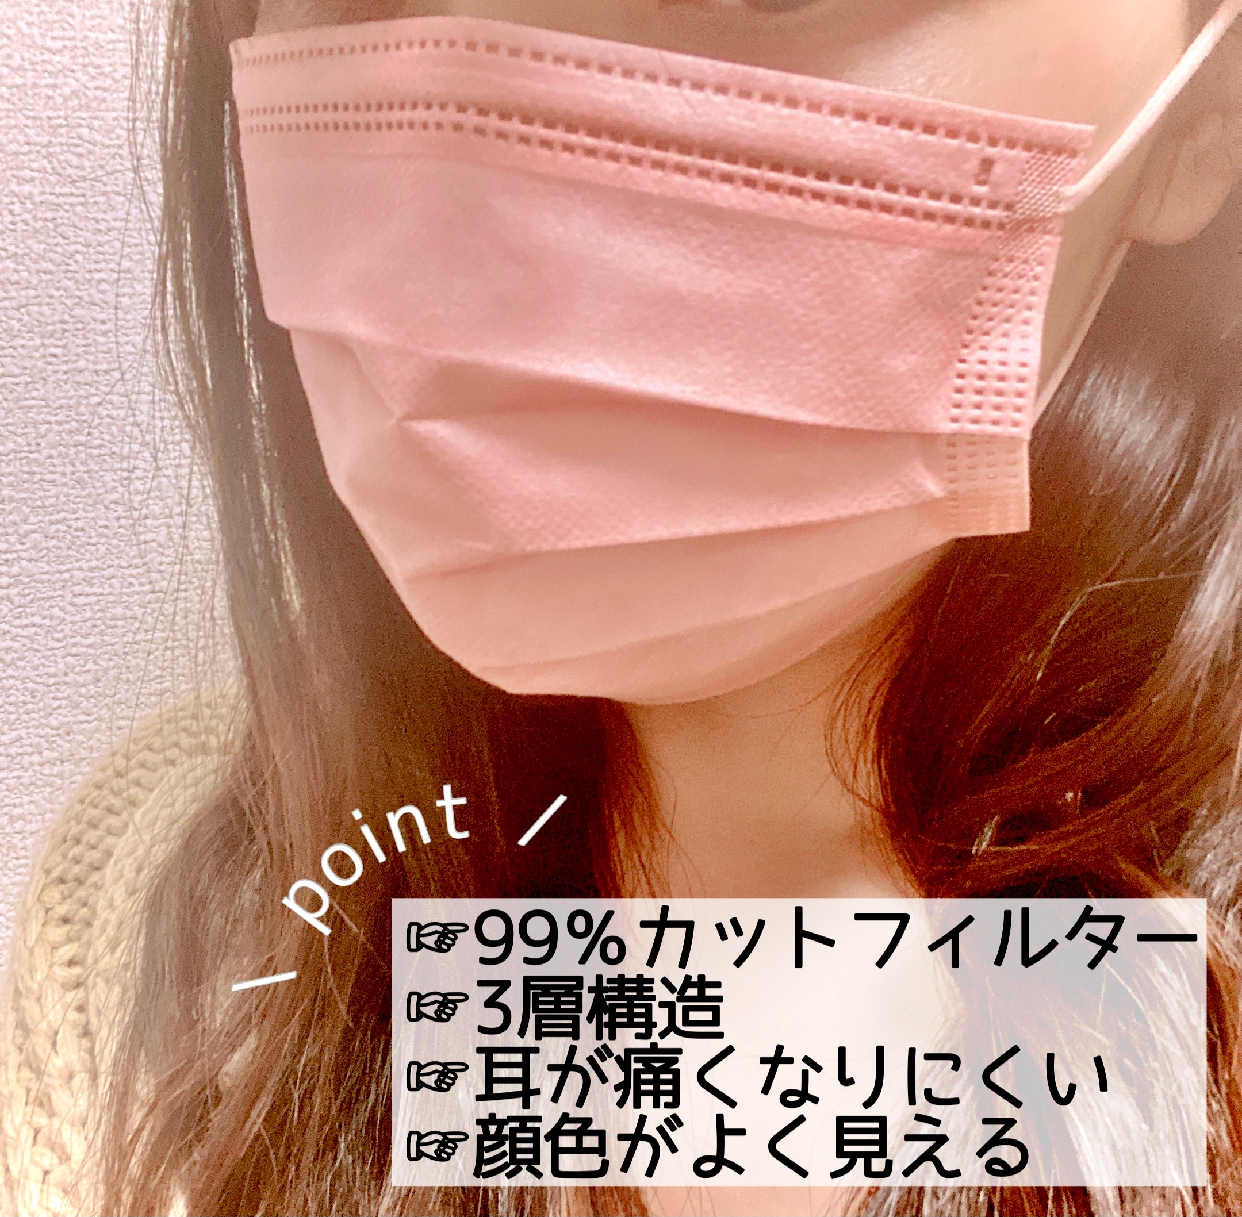 WEIMALL(ウェイモール) 血色マスクの良い点・メリットに関するChihiroさんの口コミ画像1